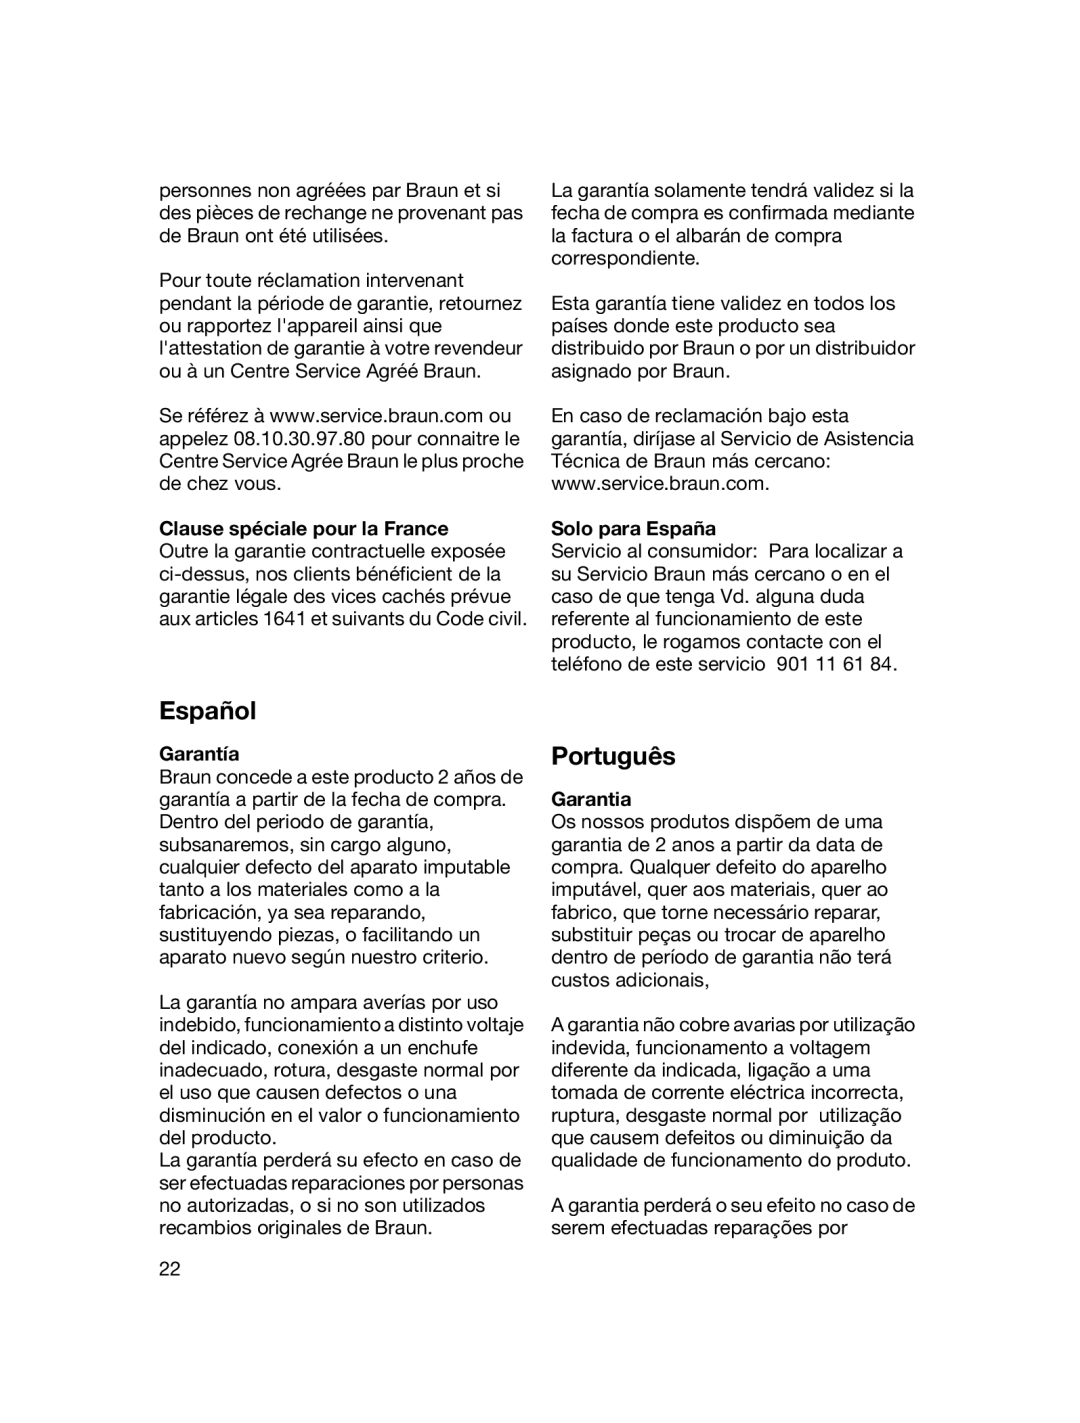 Braun MPZ 22 manual Español, Português, Solo para España, Garantía, Garantia 